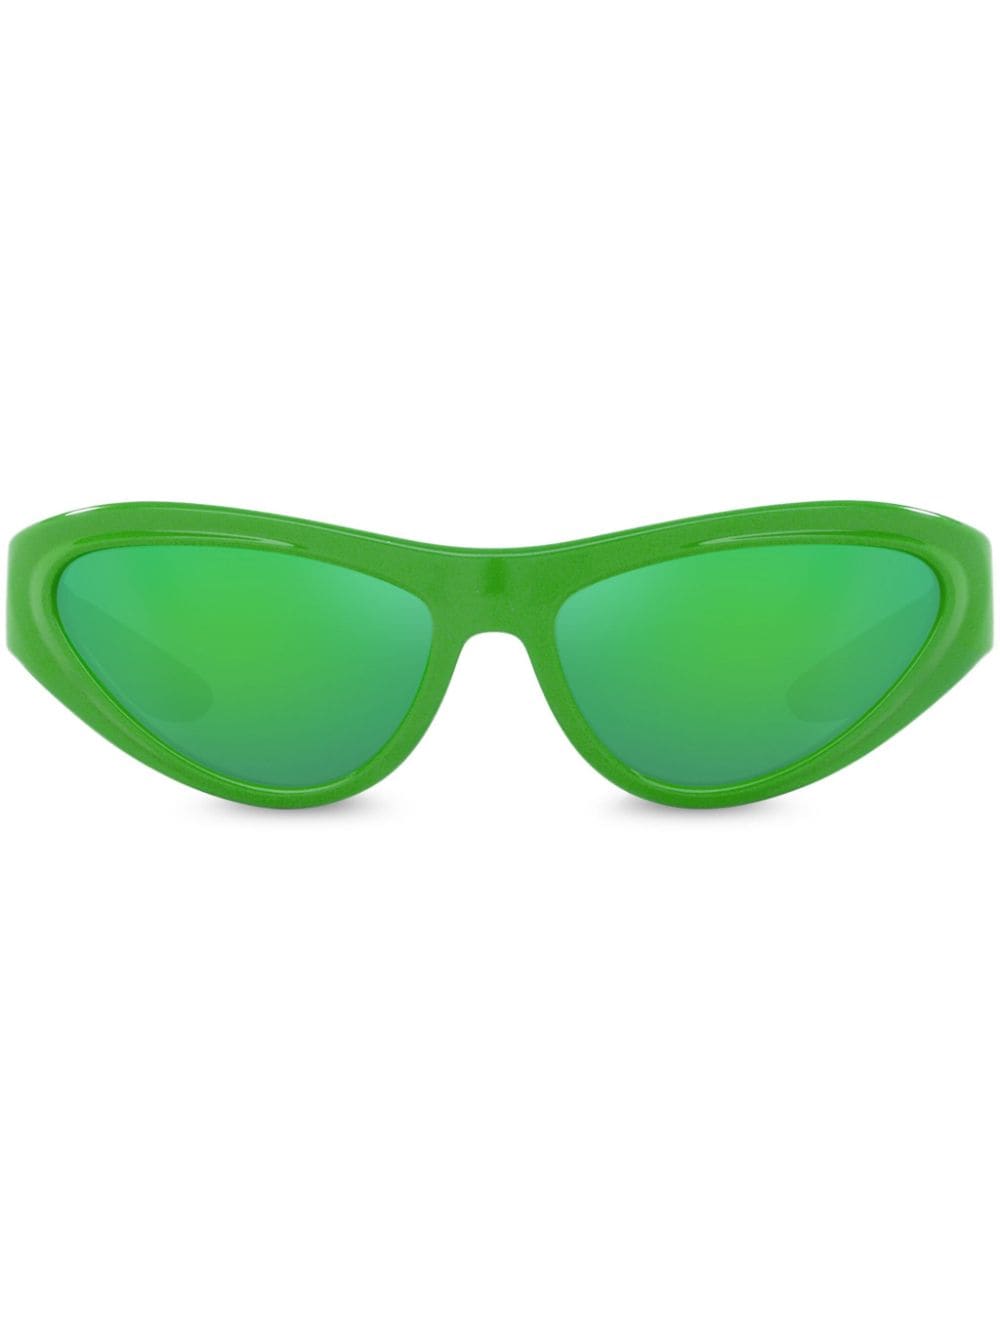 Dolce & Gabbana Eyewear DG Toy cat-eye frame sunglasses - Green von Dolce & Gabbana Eyewear